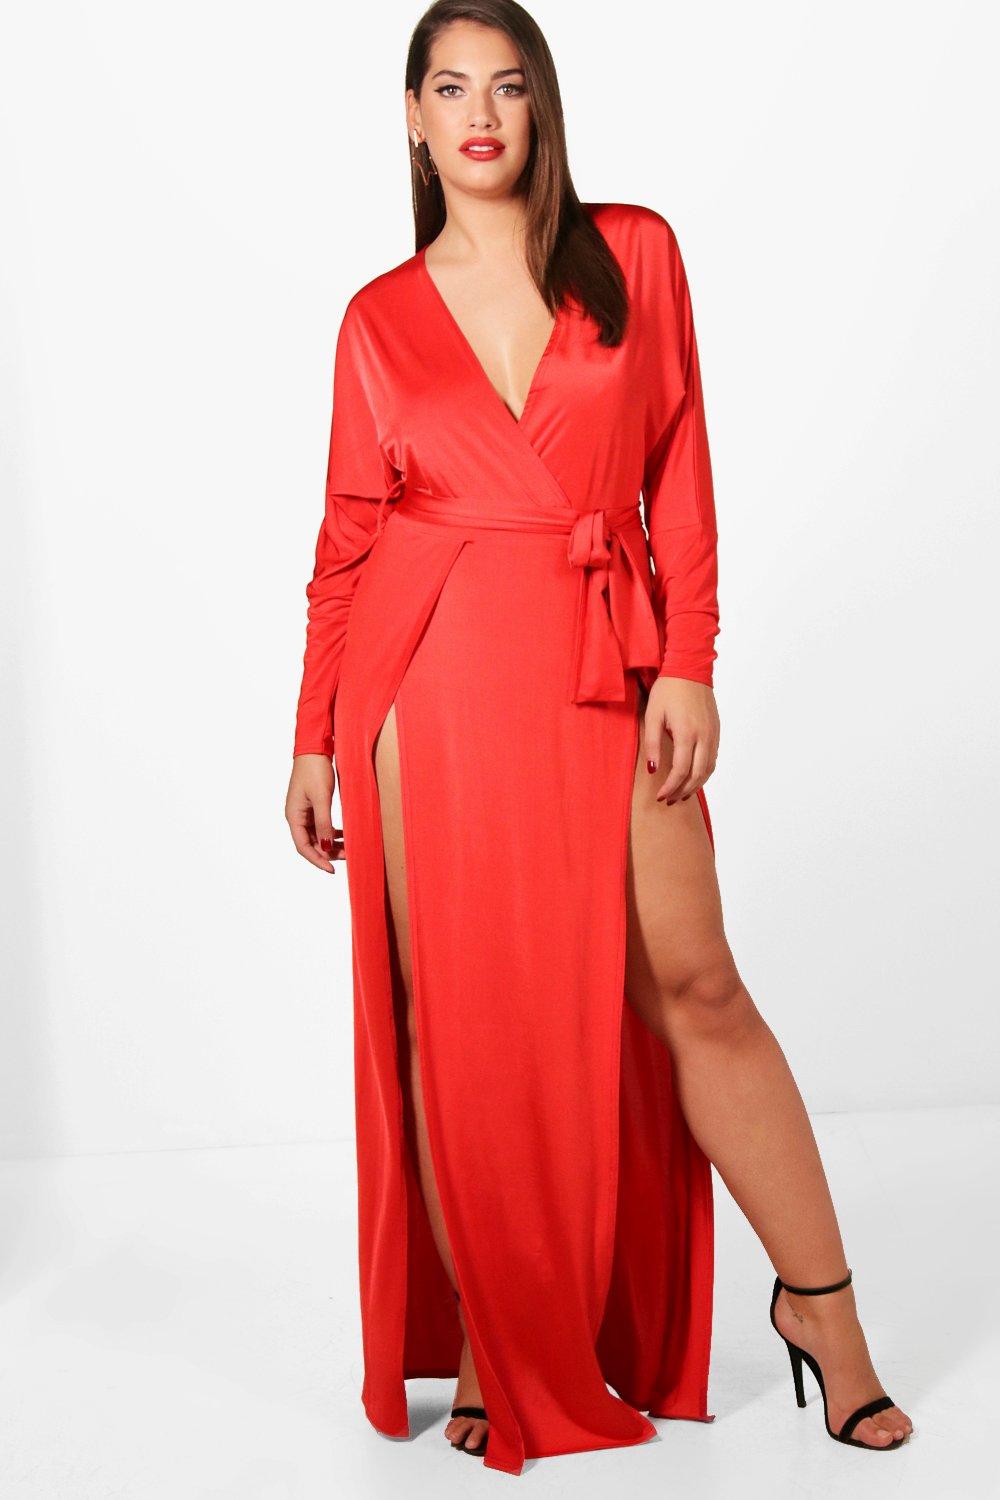 Boohoo Womens Plus Verity Slinky Plunge Split Maxi Dress | eBay